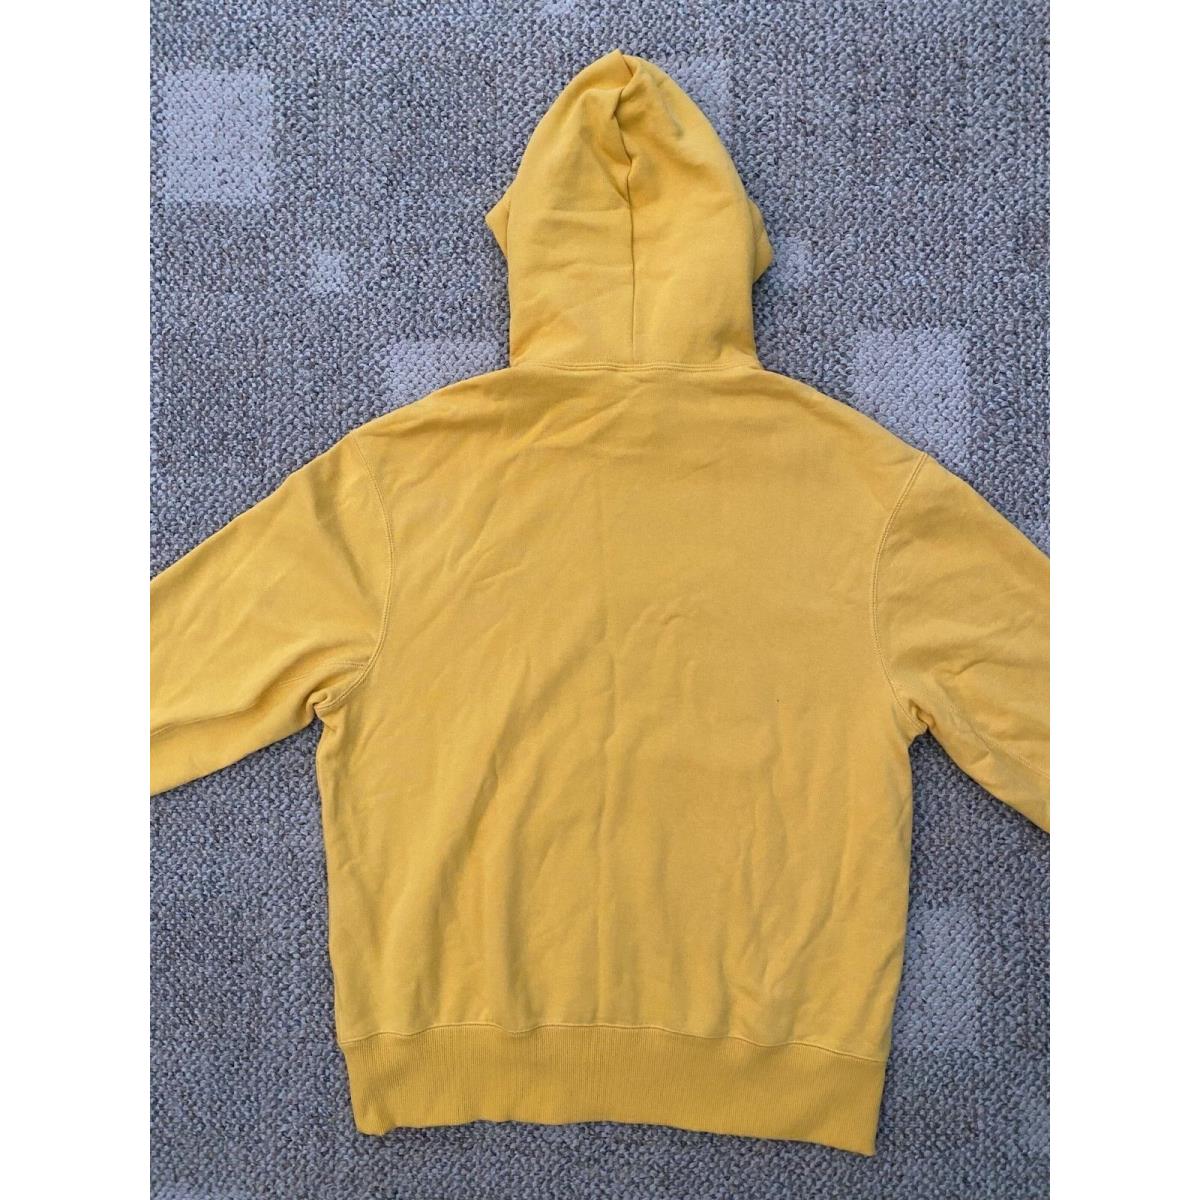 Nike clothing  - Pollen Yellow 2